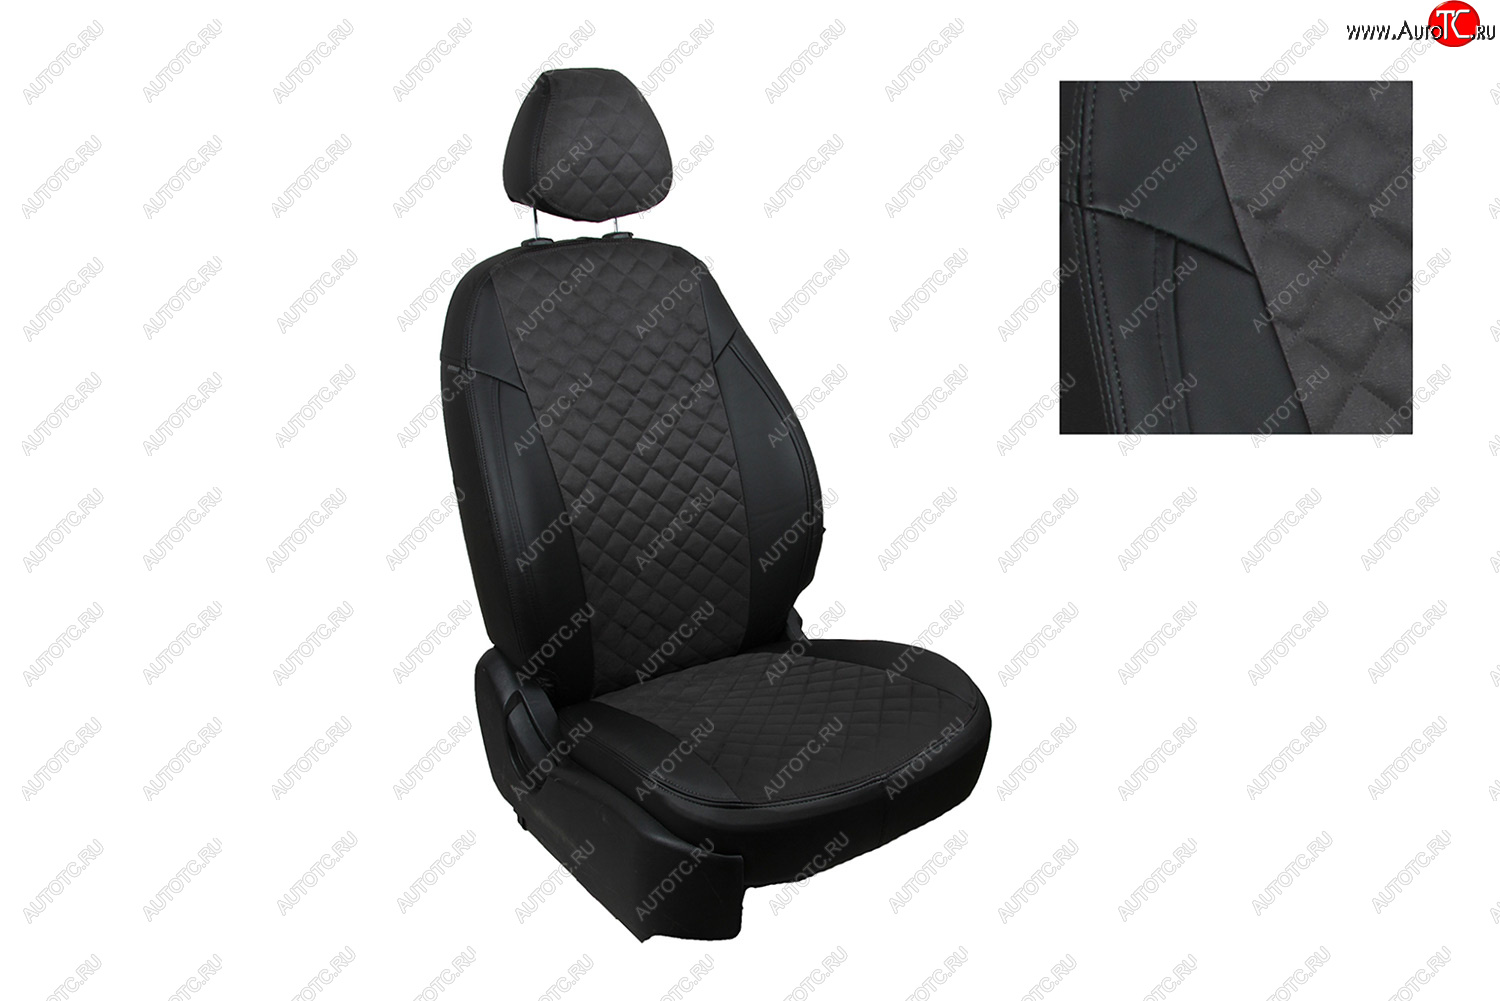 6 699 р. Чехлы для сидений Seintex Ромб Алькантара  Chevrolet Aveo  T300 (2011-2015)  с доставкой в г. Калуга